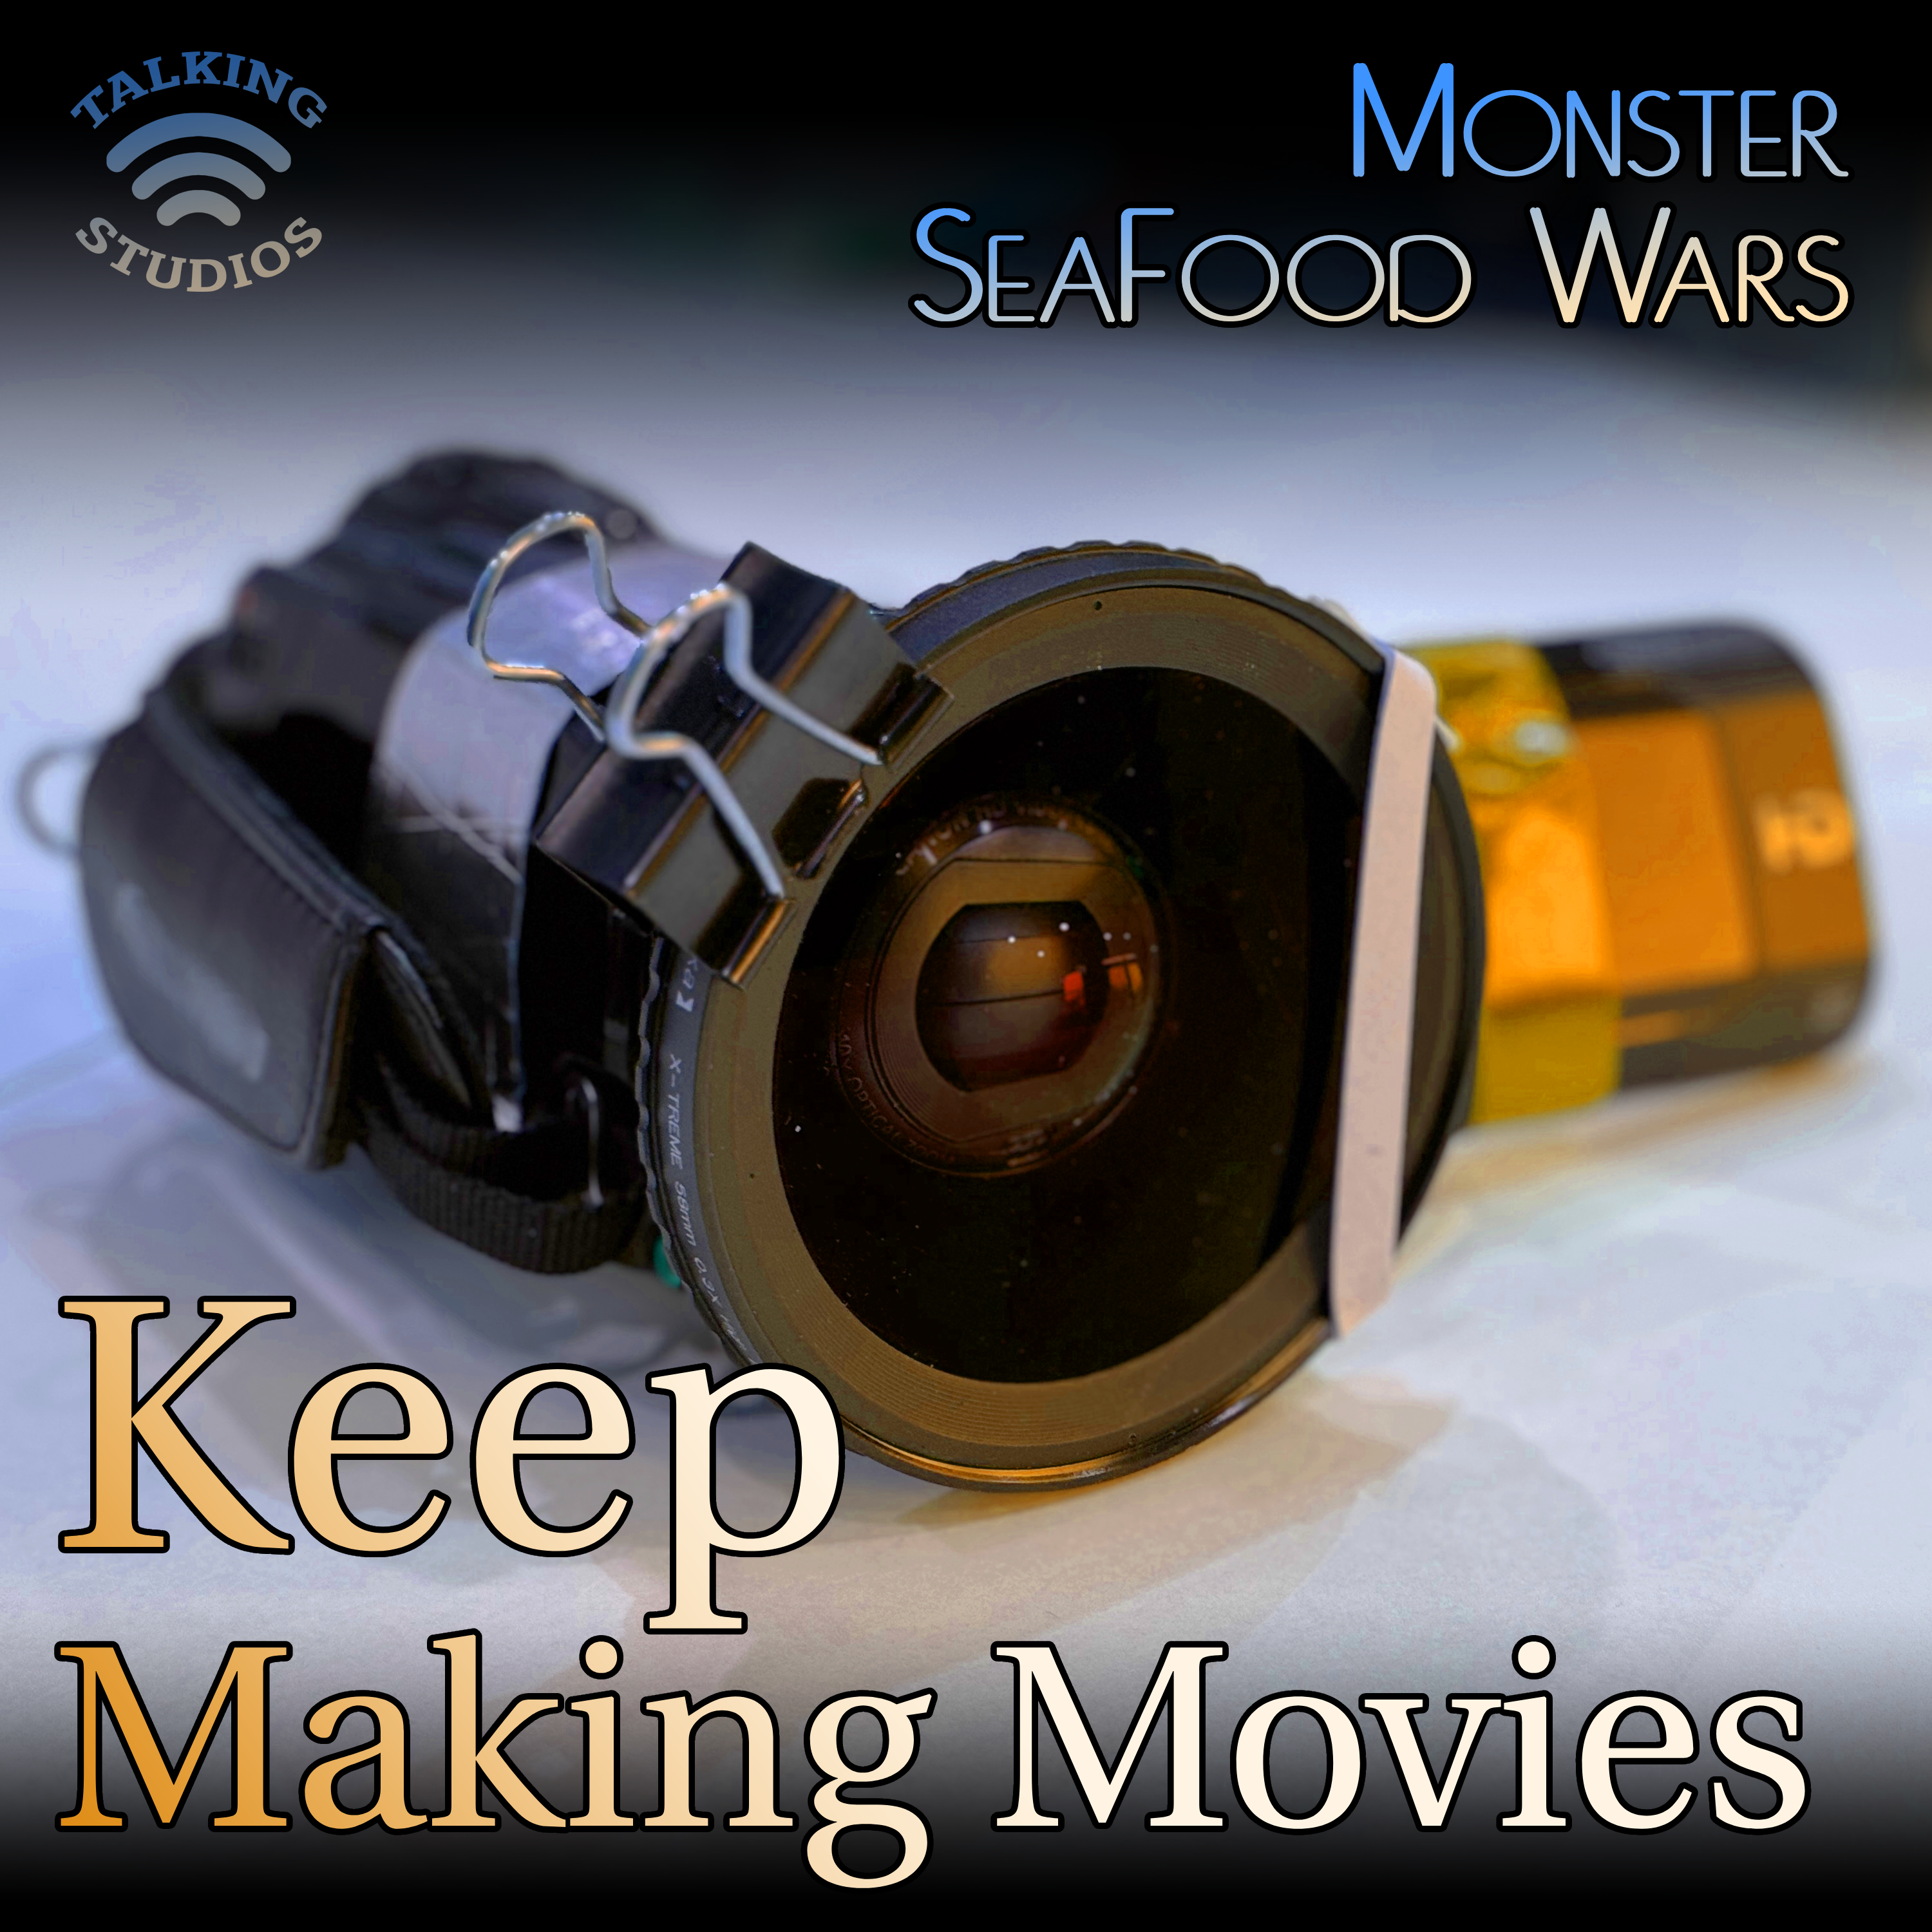 7. Monster SeaFood Wars